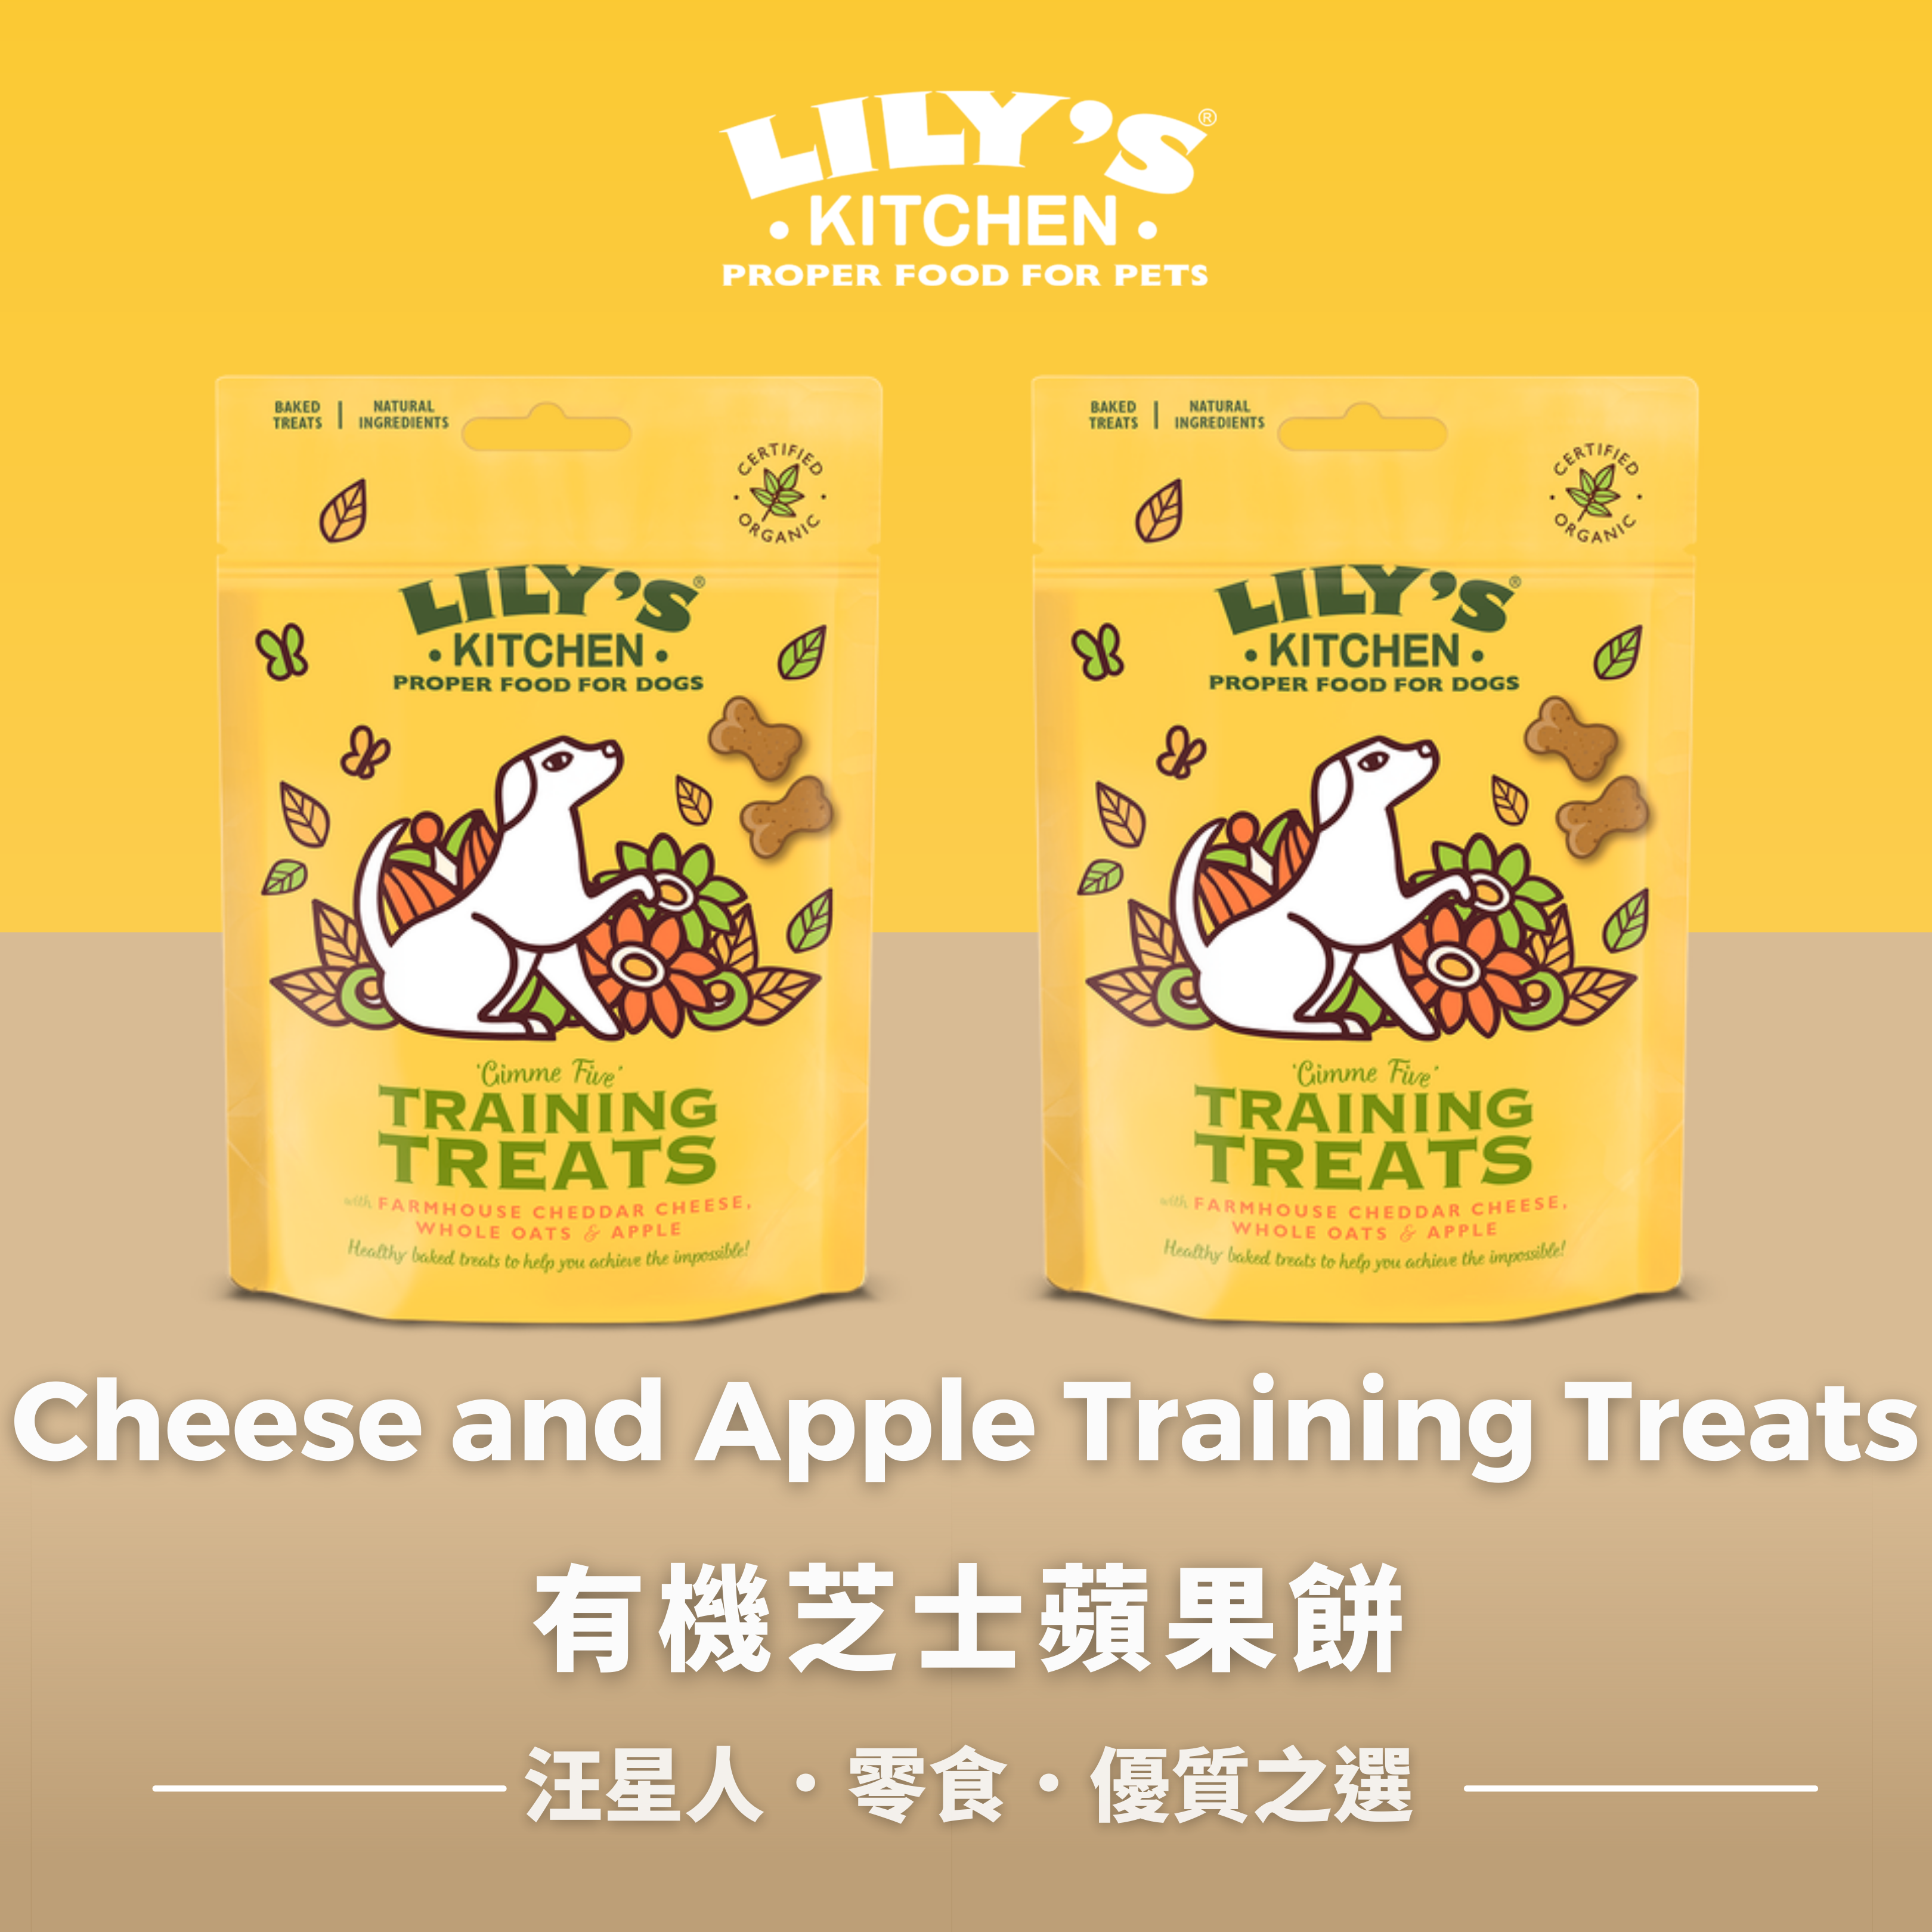 Dog Treats狗狗零食- Organic Cheese and Apple Training Treats有機芝士蘋果餅